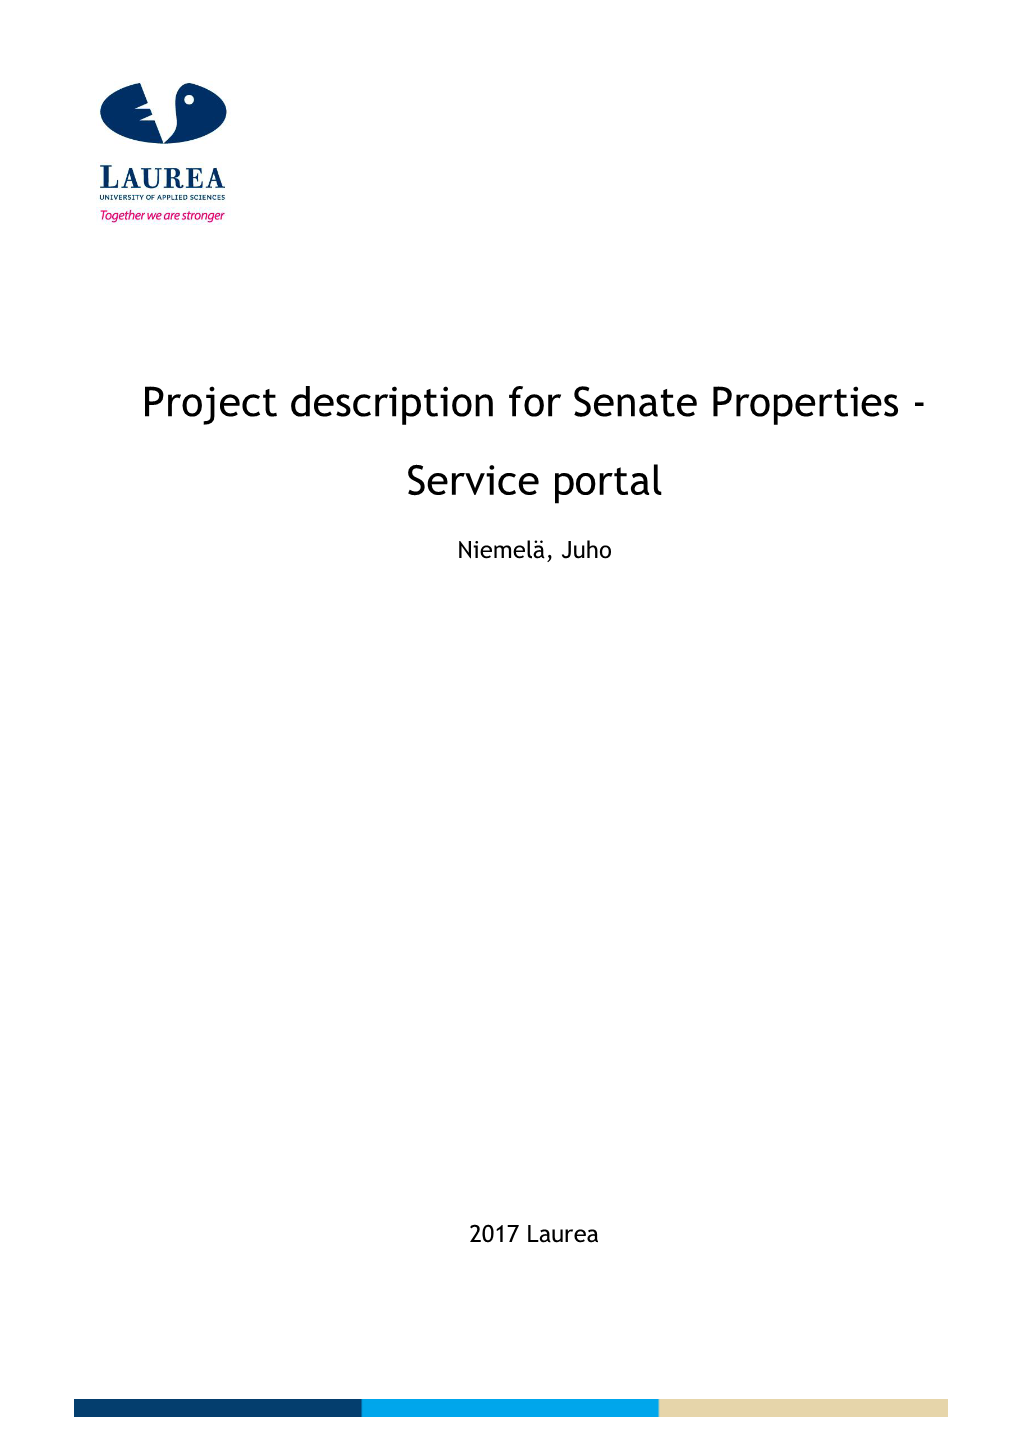 Project Description for Senate Properties - Service Portal